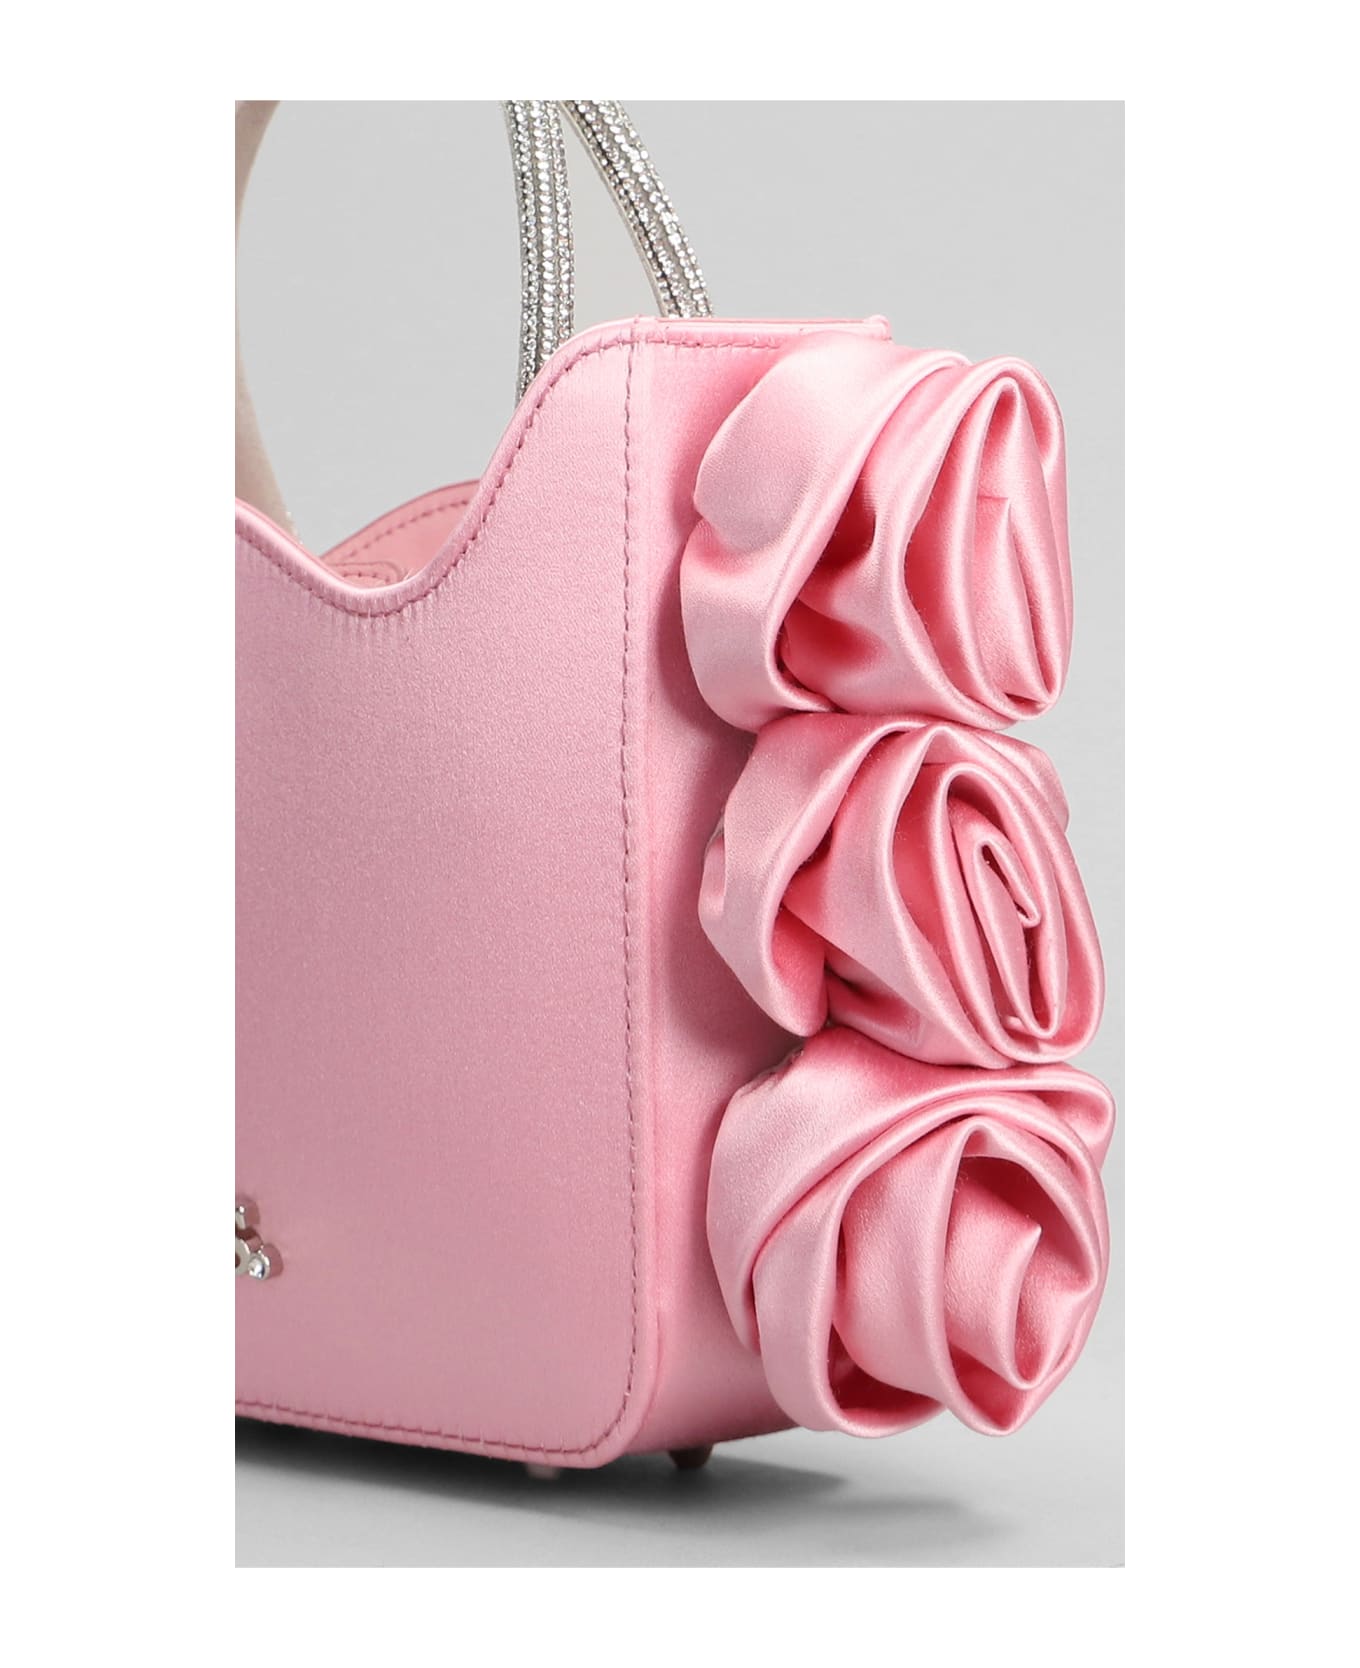 Le Silla Rose Hand Bag In Rose-pink Satin - rose-pink